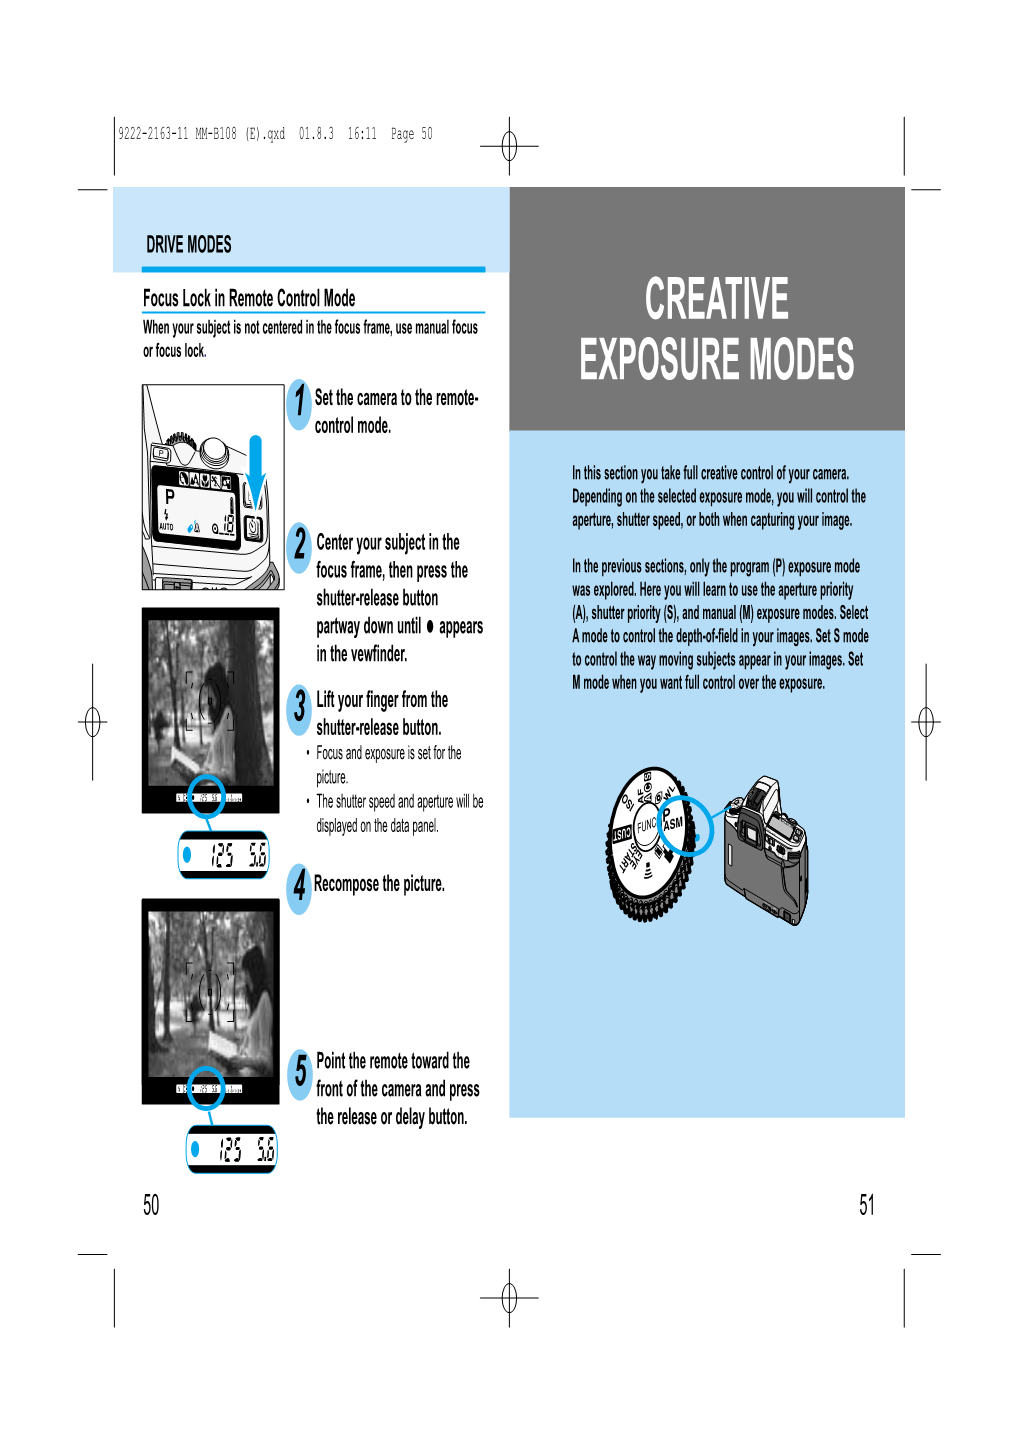 Creative Exposure Modes